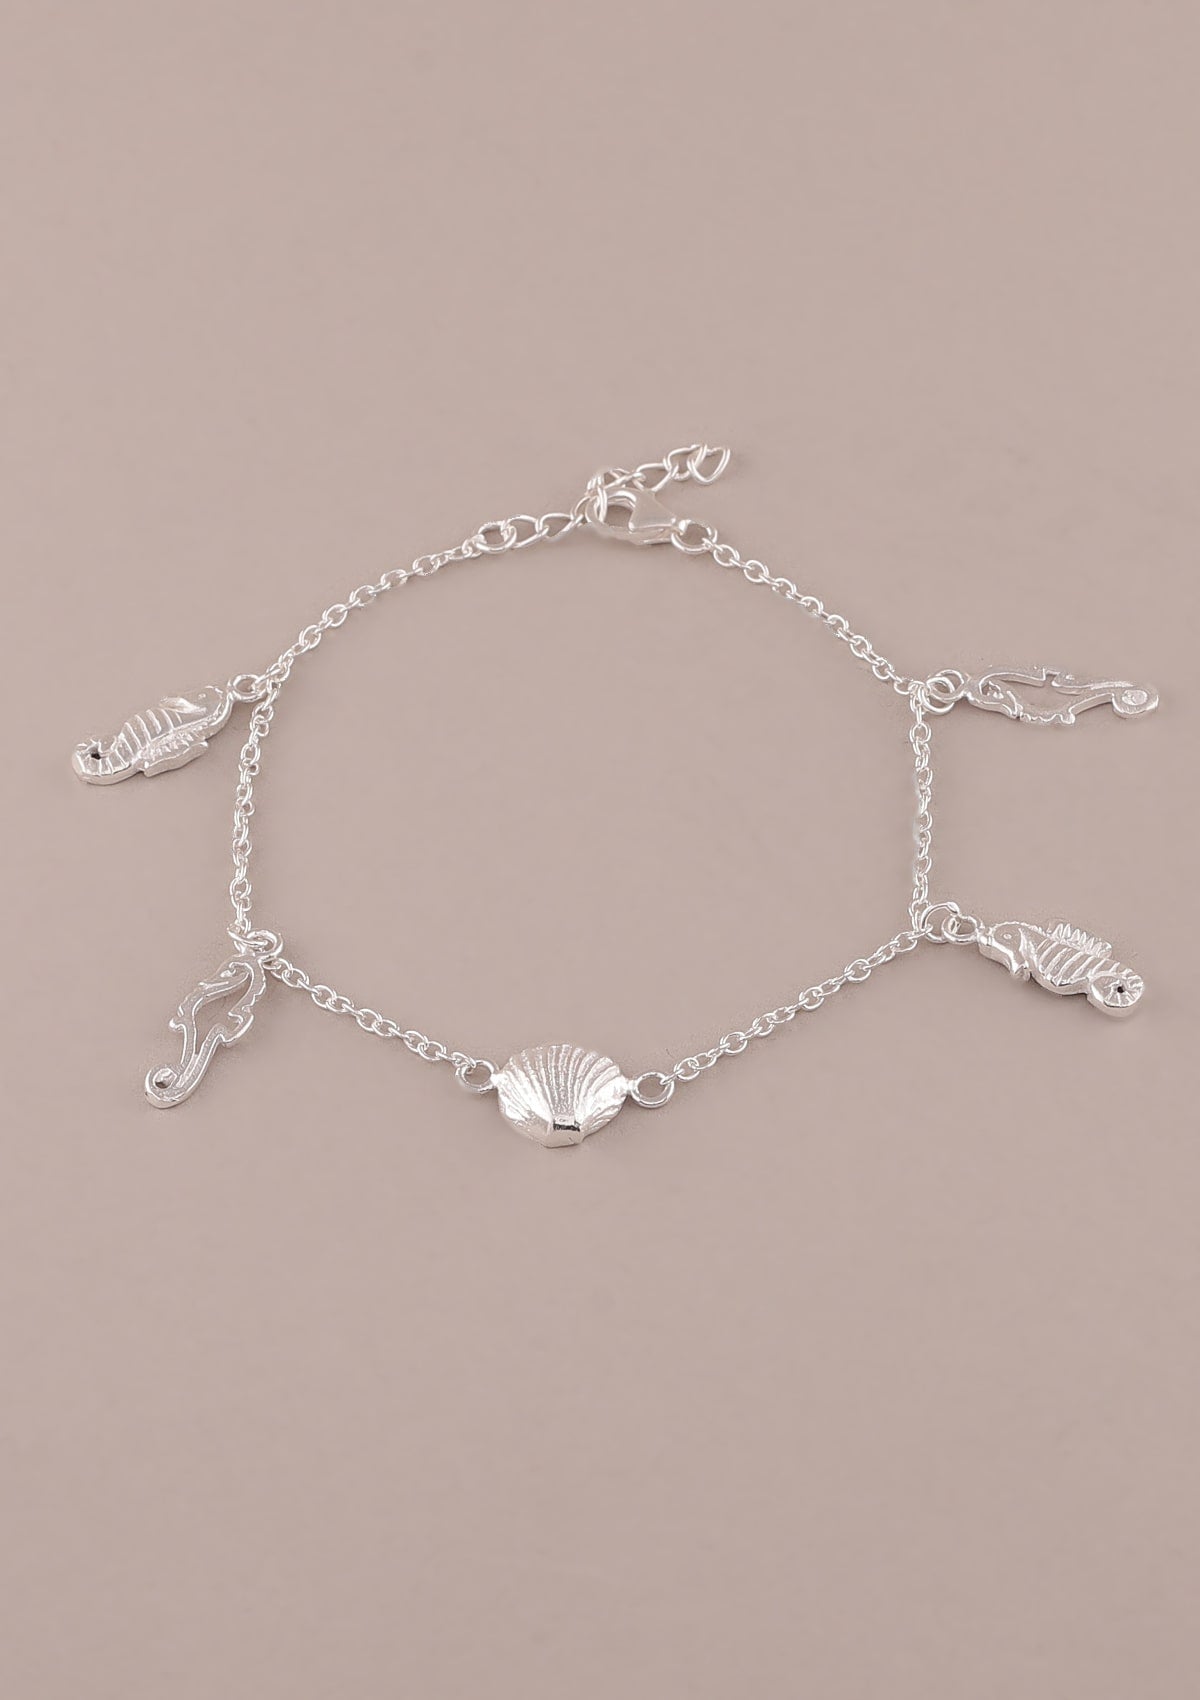 Silver Ocean Charm Bracelet - IshqMe